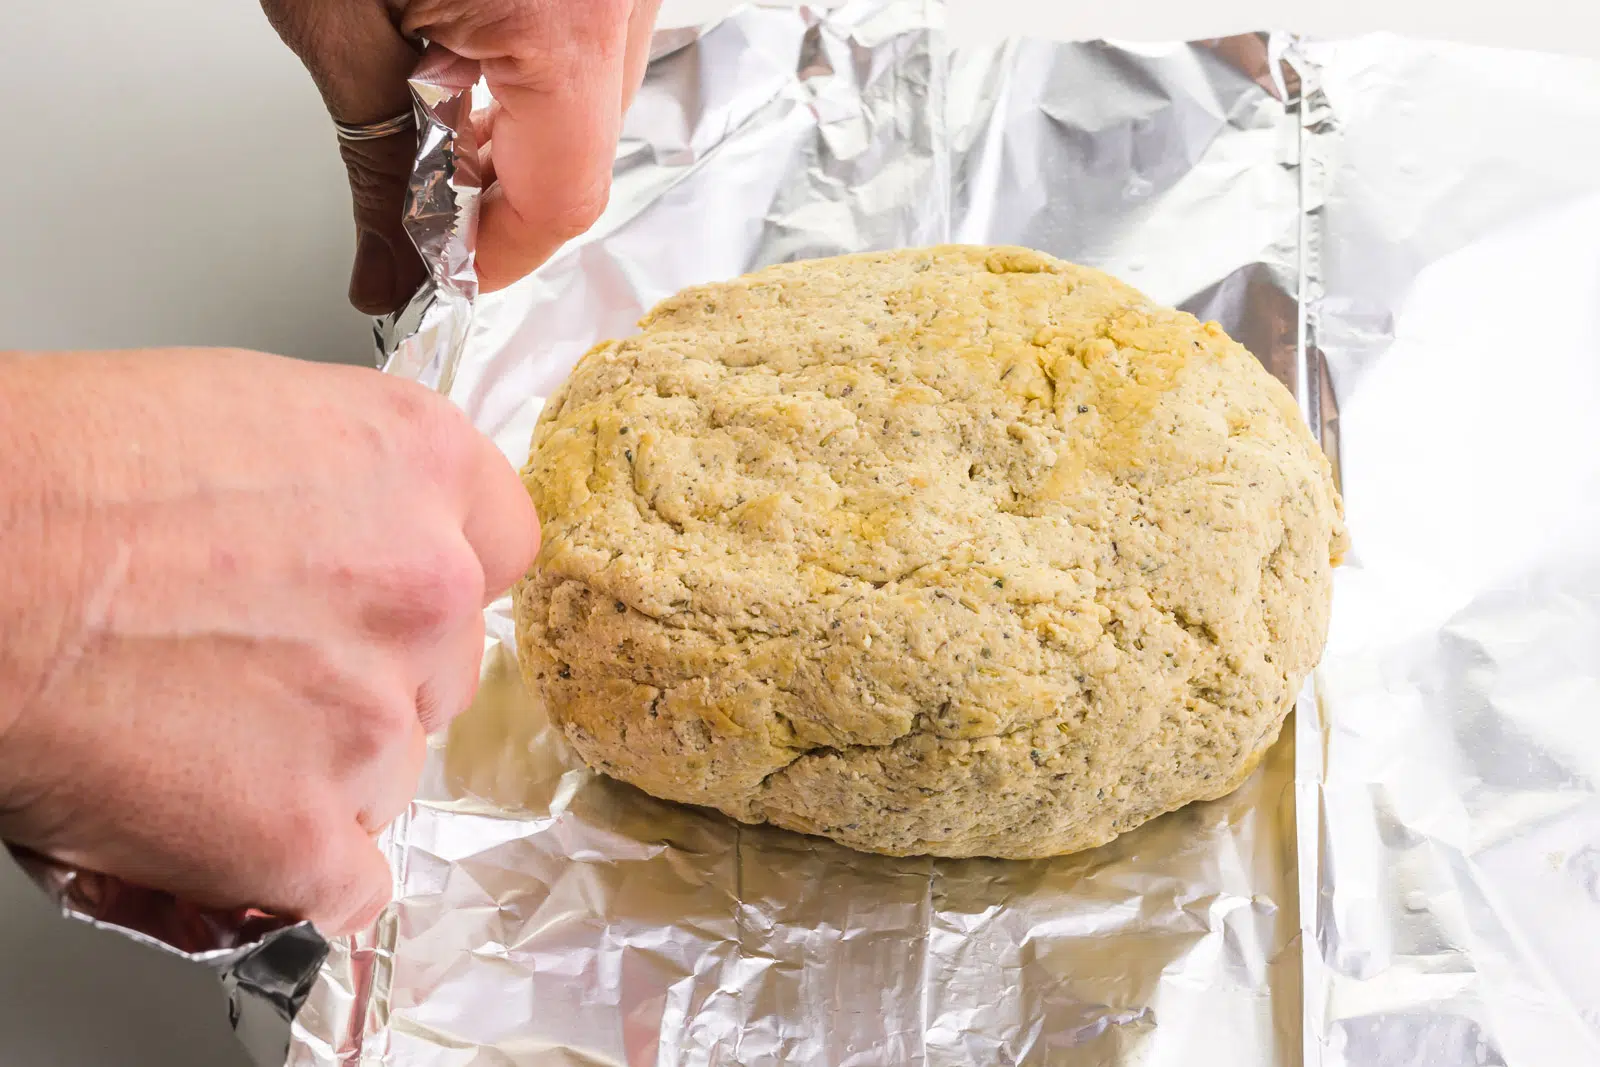 Hands are folding foil up around a vegan turkey loaf.